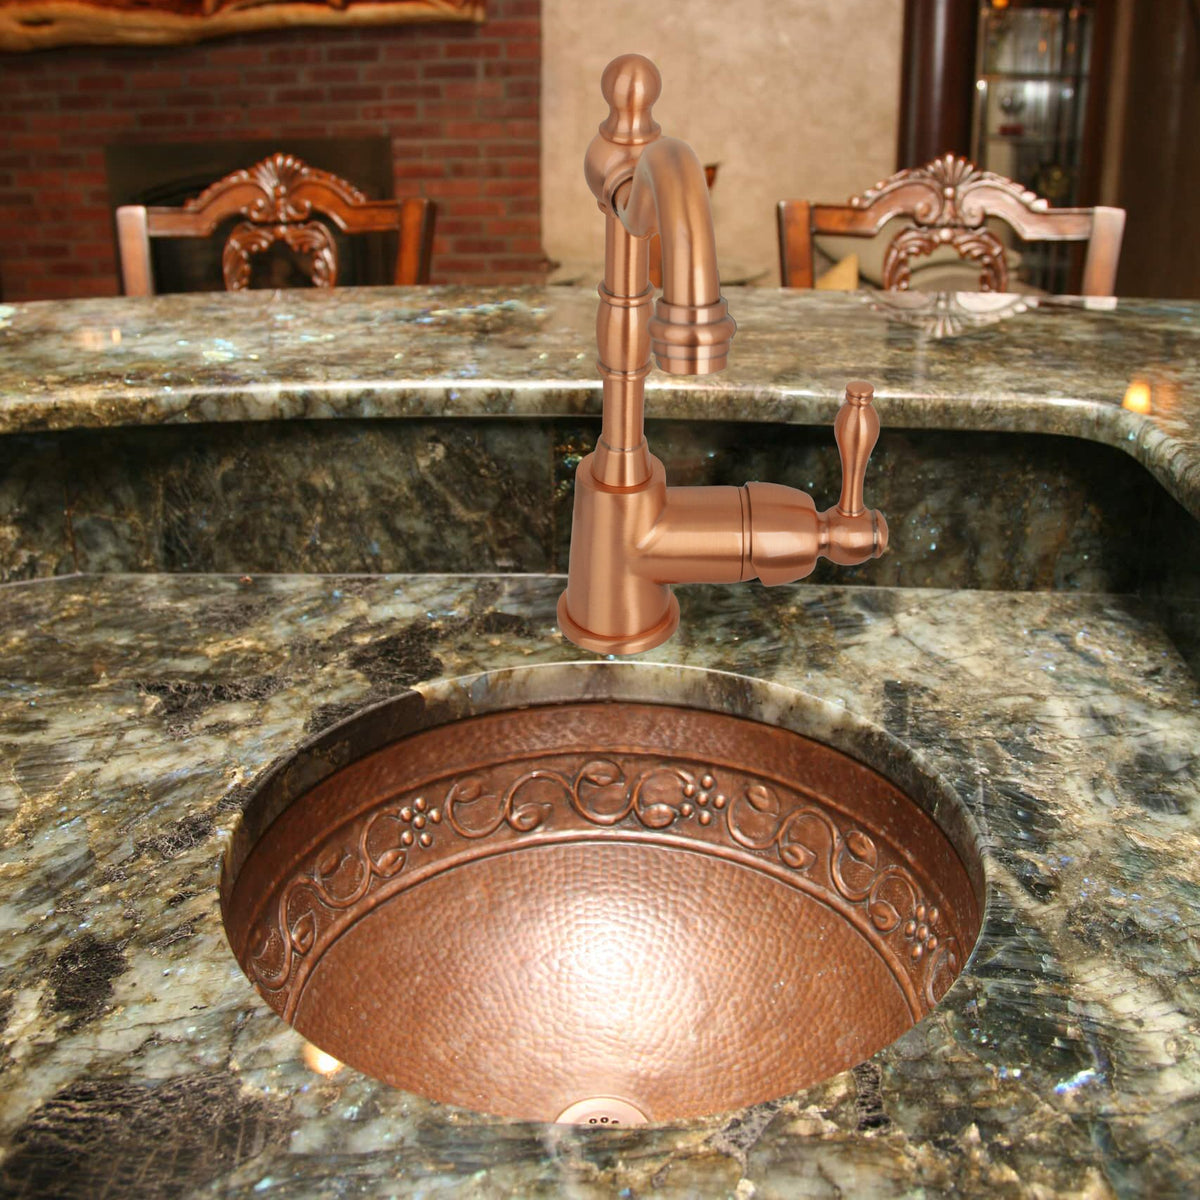 Antique copper sink